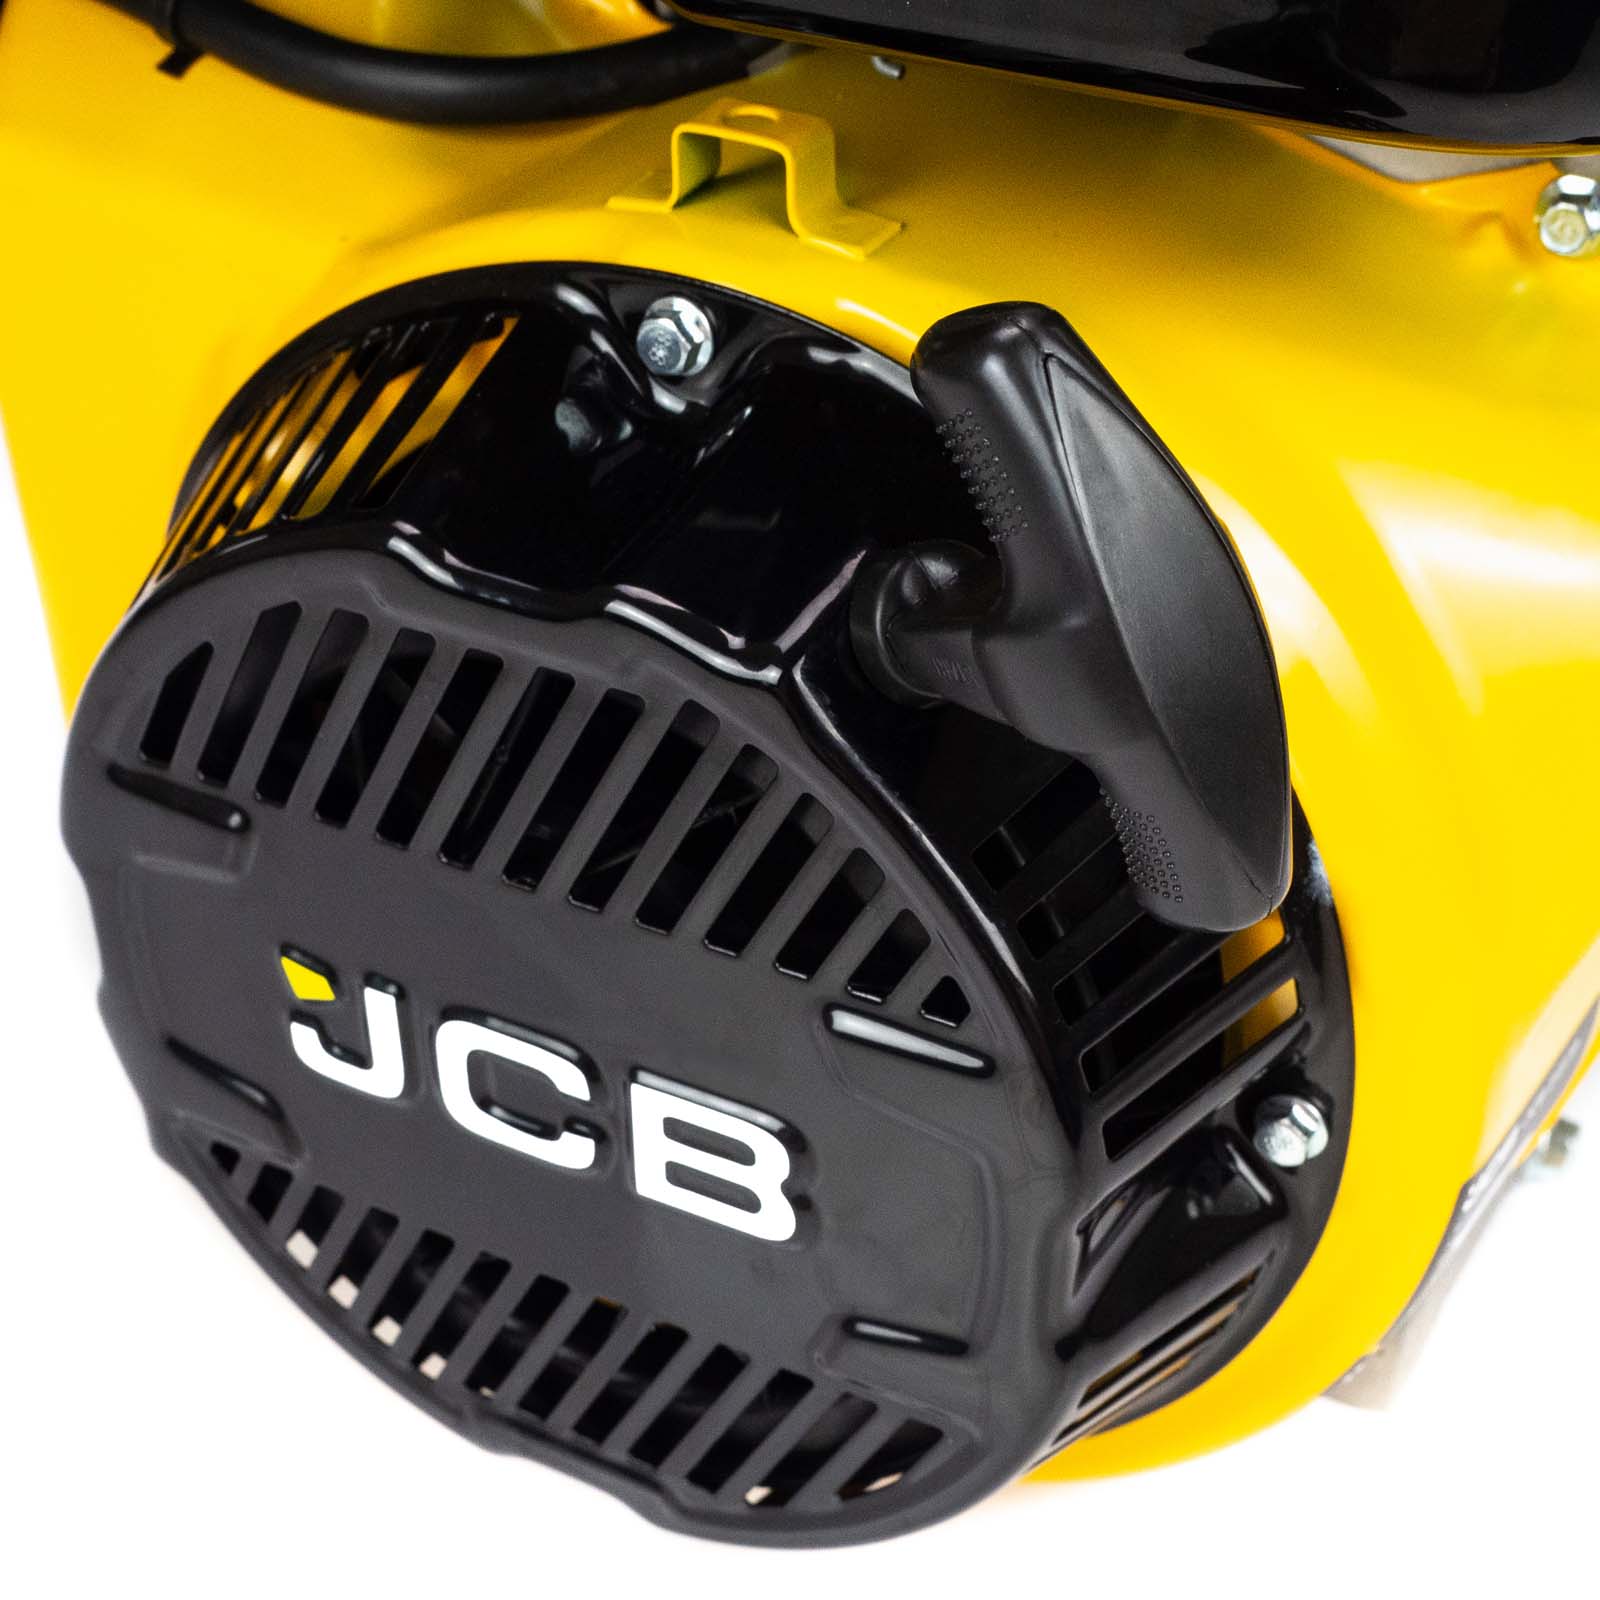 JCB 4 Stroke Horizontal Straight Shaft Petrol Engine 457cc JCB-E460P